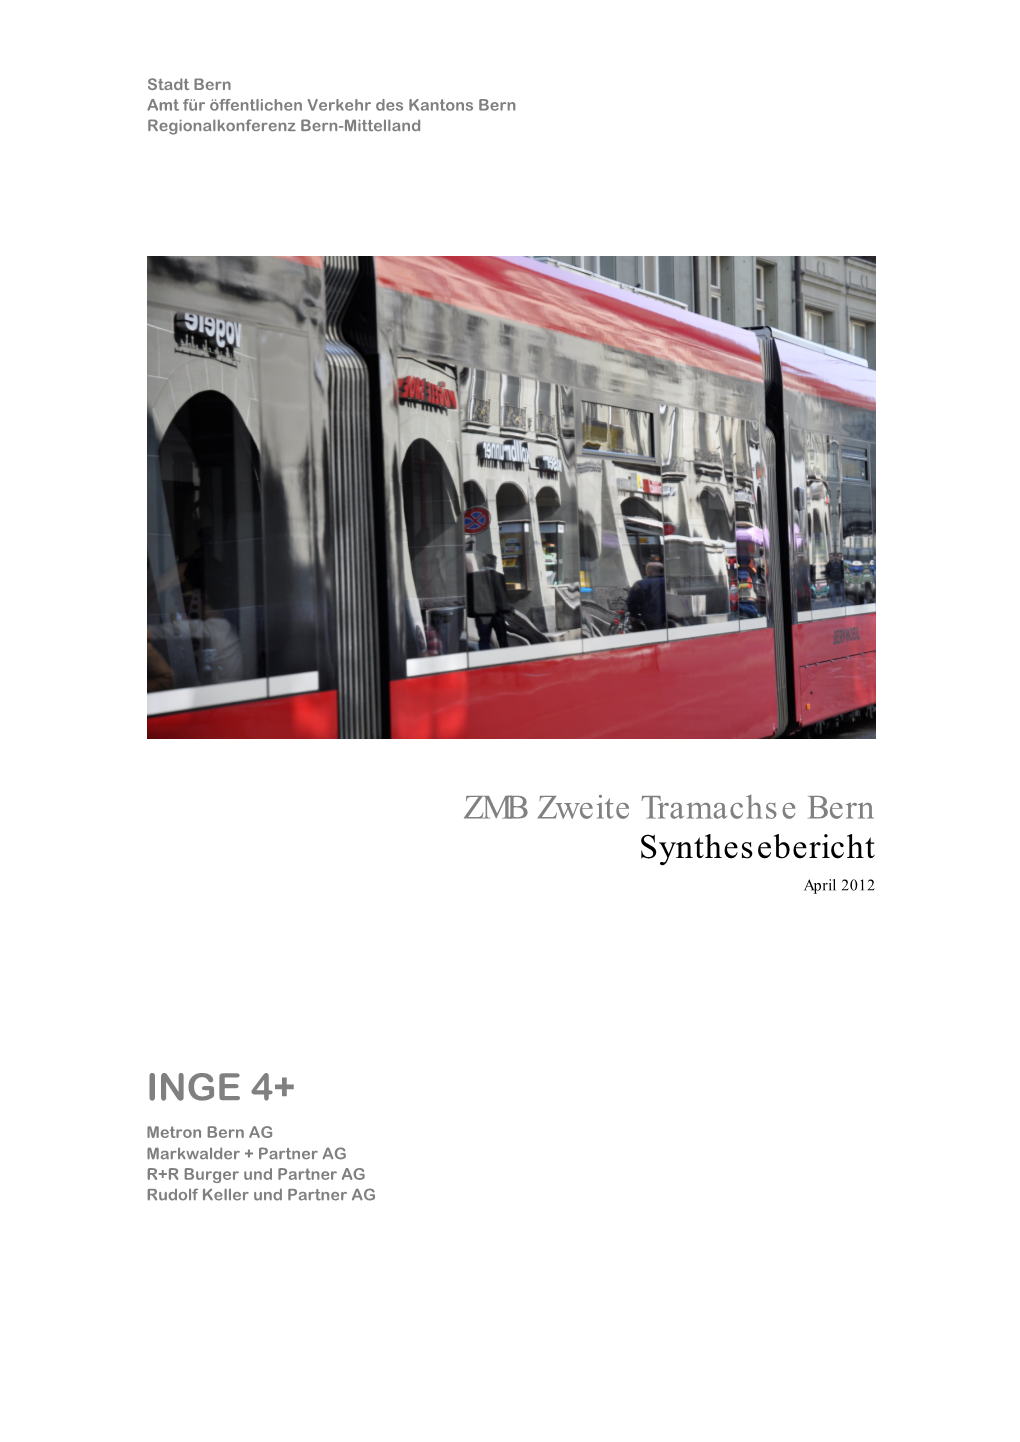 ZMB Zweite Tramachse Bern Synthesebericht April 2012